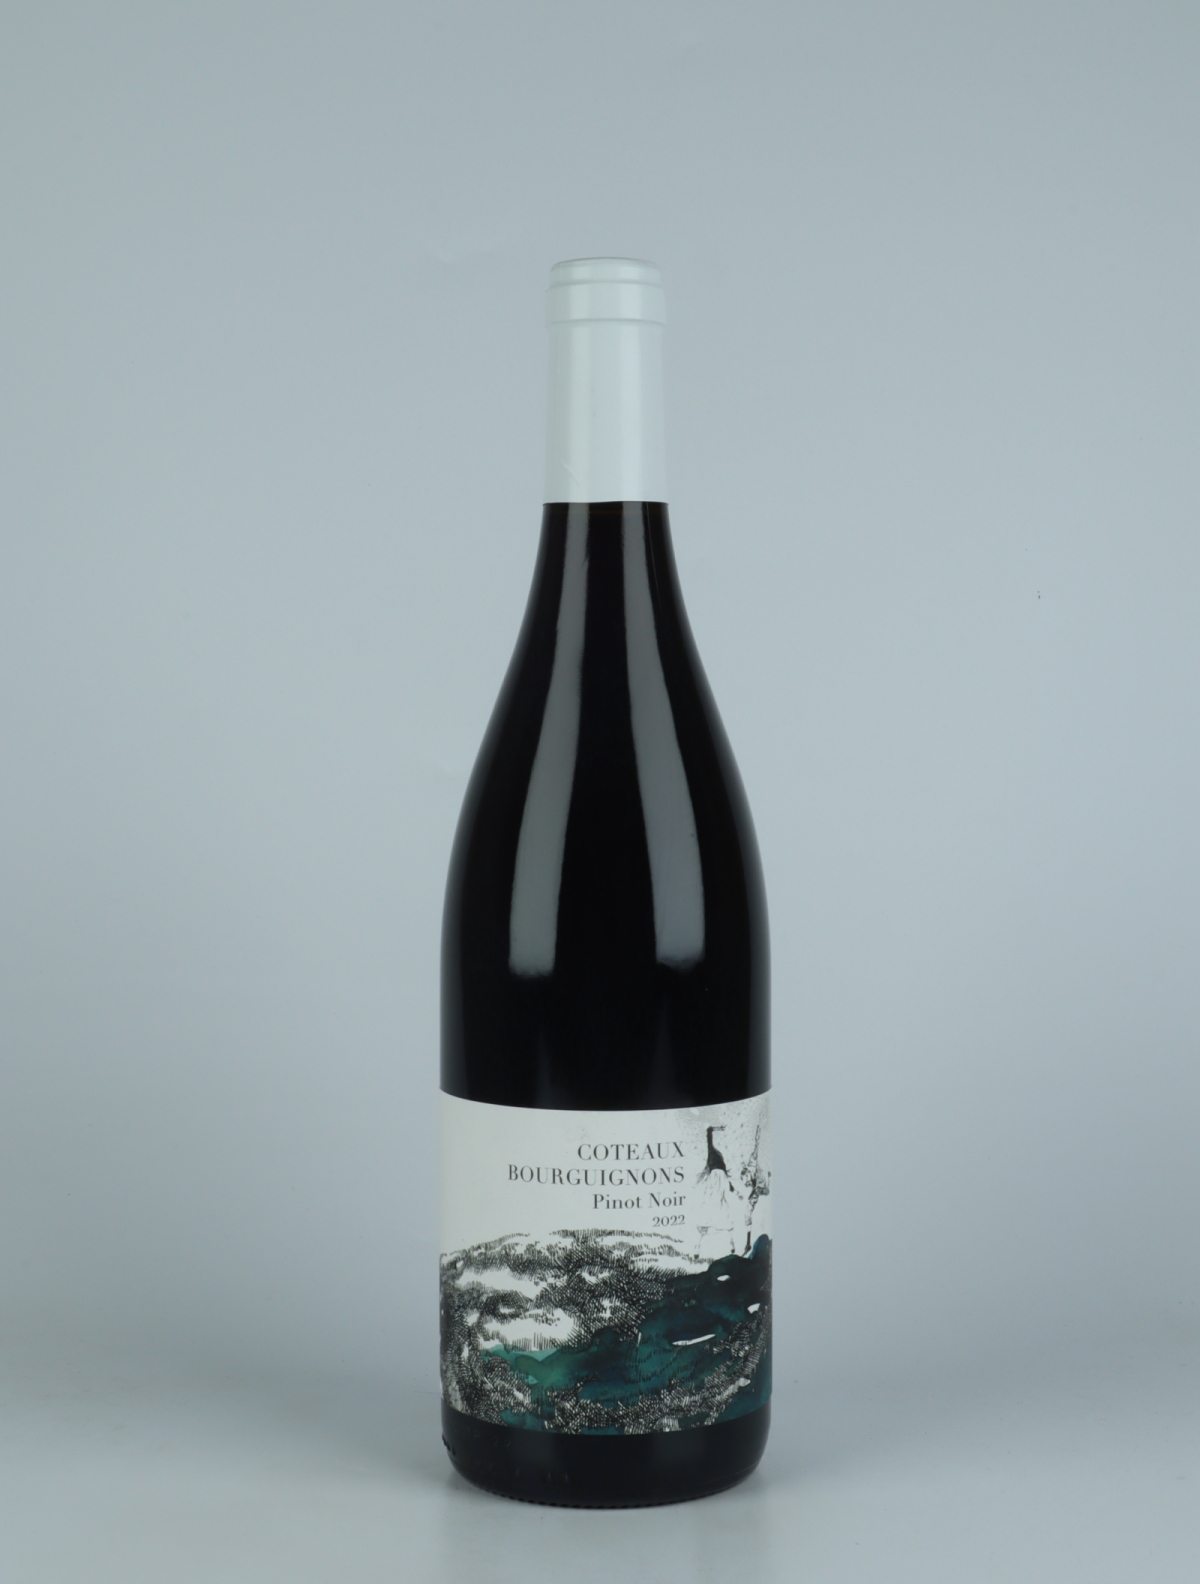 En flaske 2022 Coteaux Bourguignons - Pinot Noir Rødvin fra Domaine Didon, Bourgogne i Frankrig